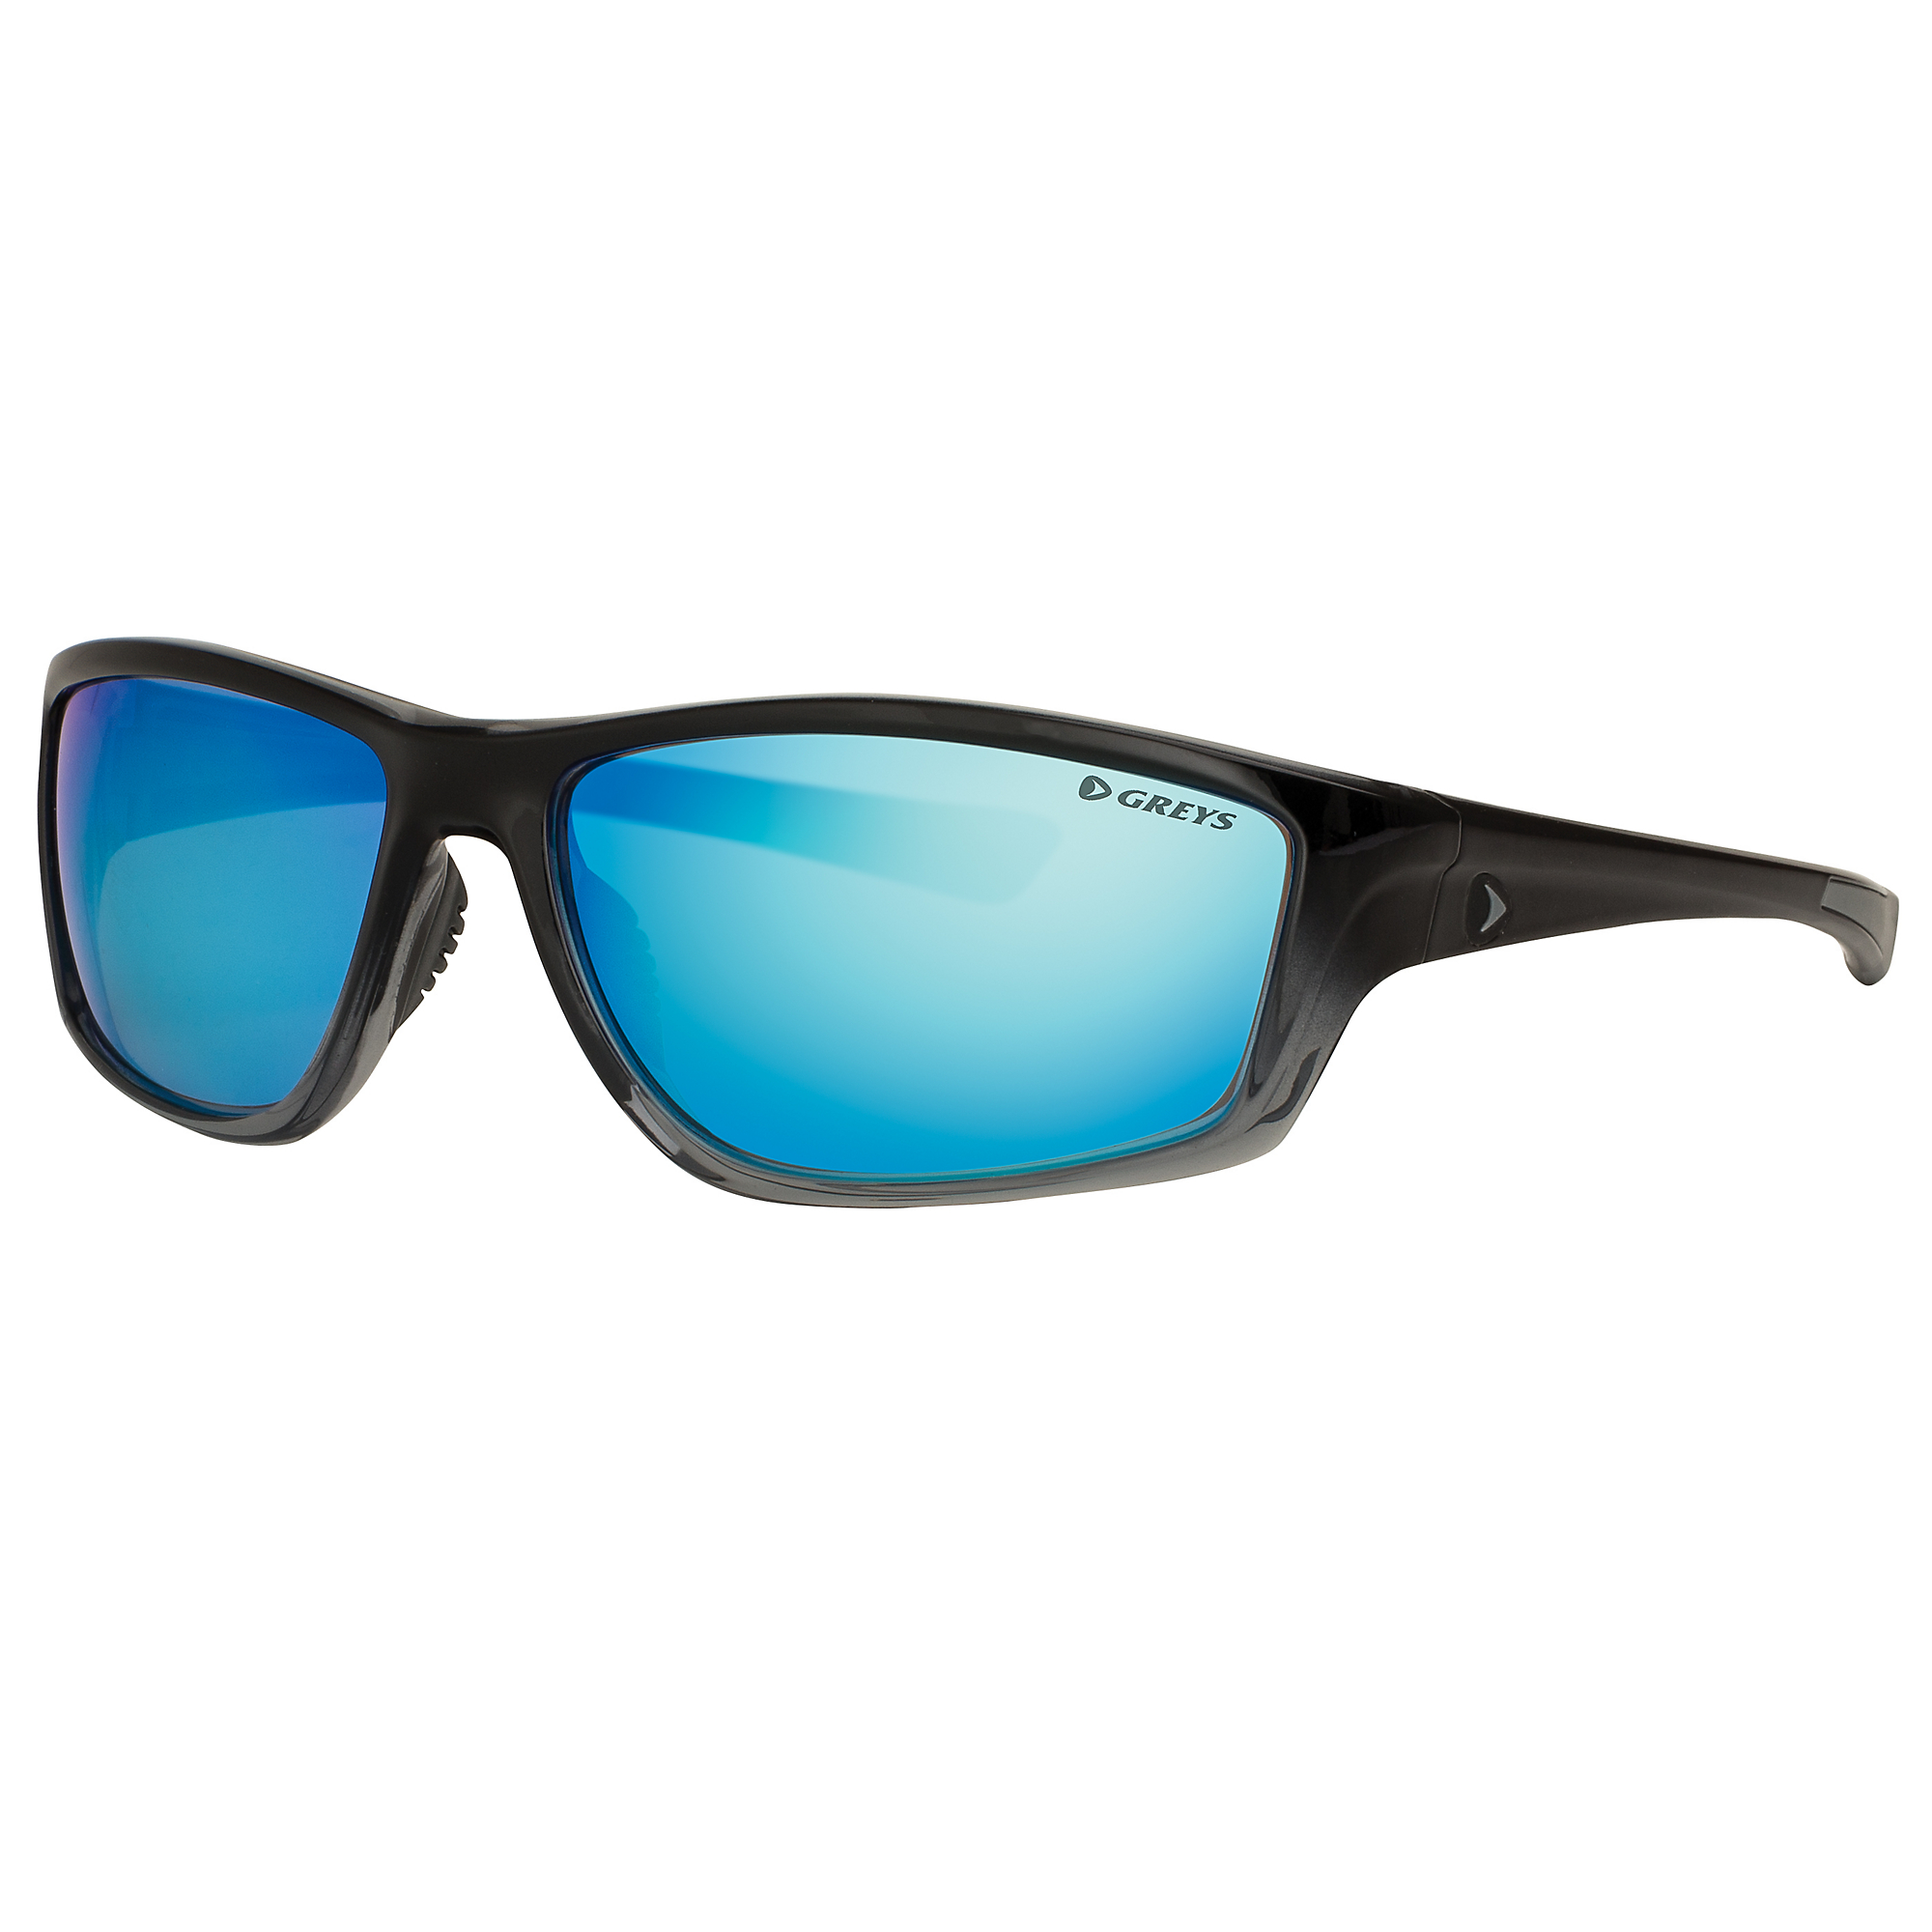 Greys G3 Sunglasses (Gloss Black Fade/Blue Mirror) 1443837.jpg